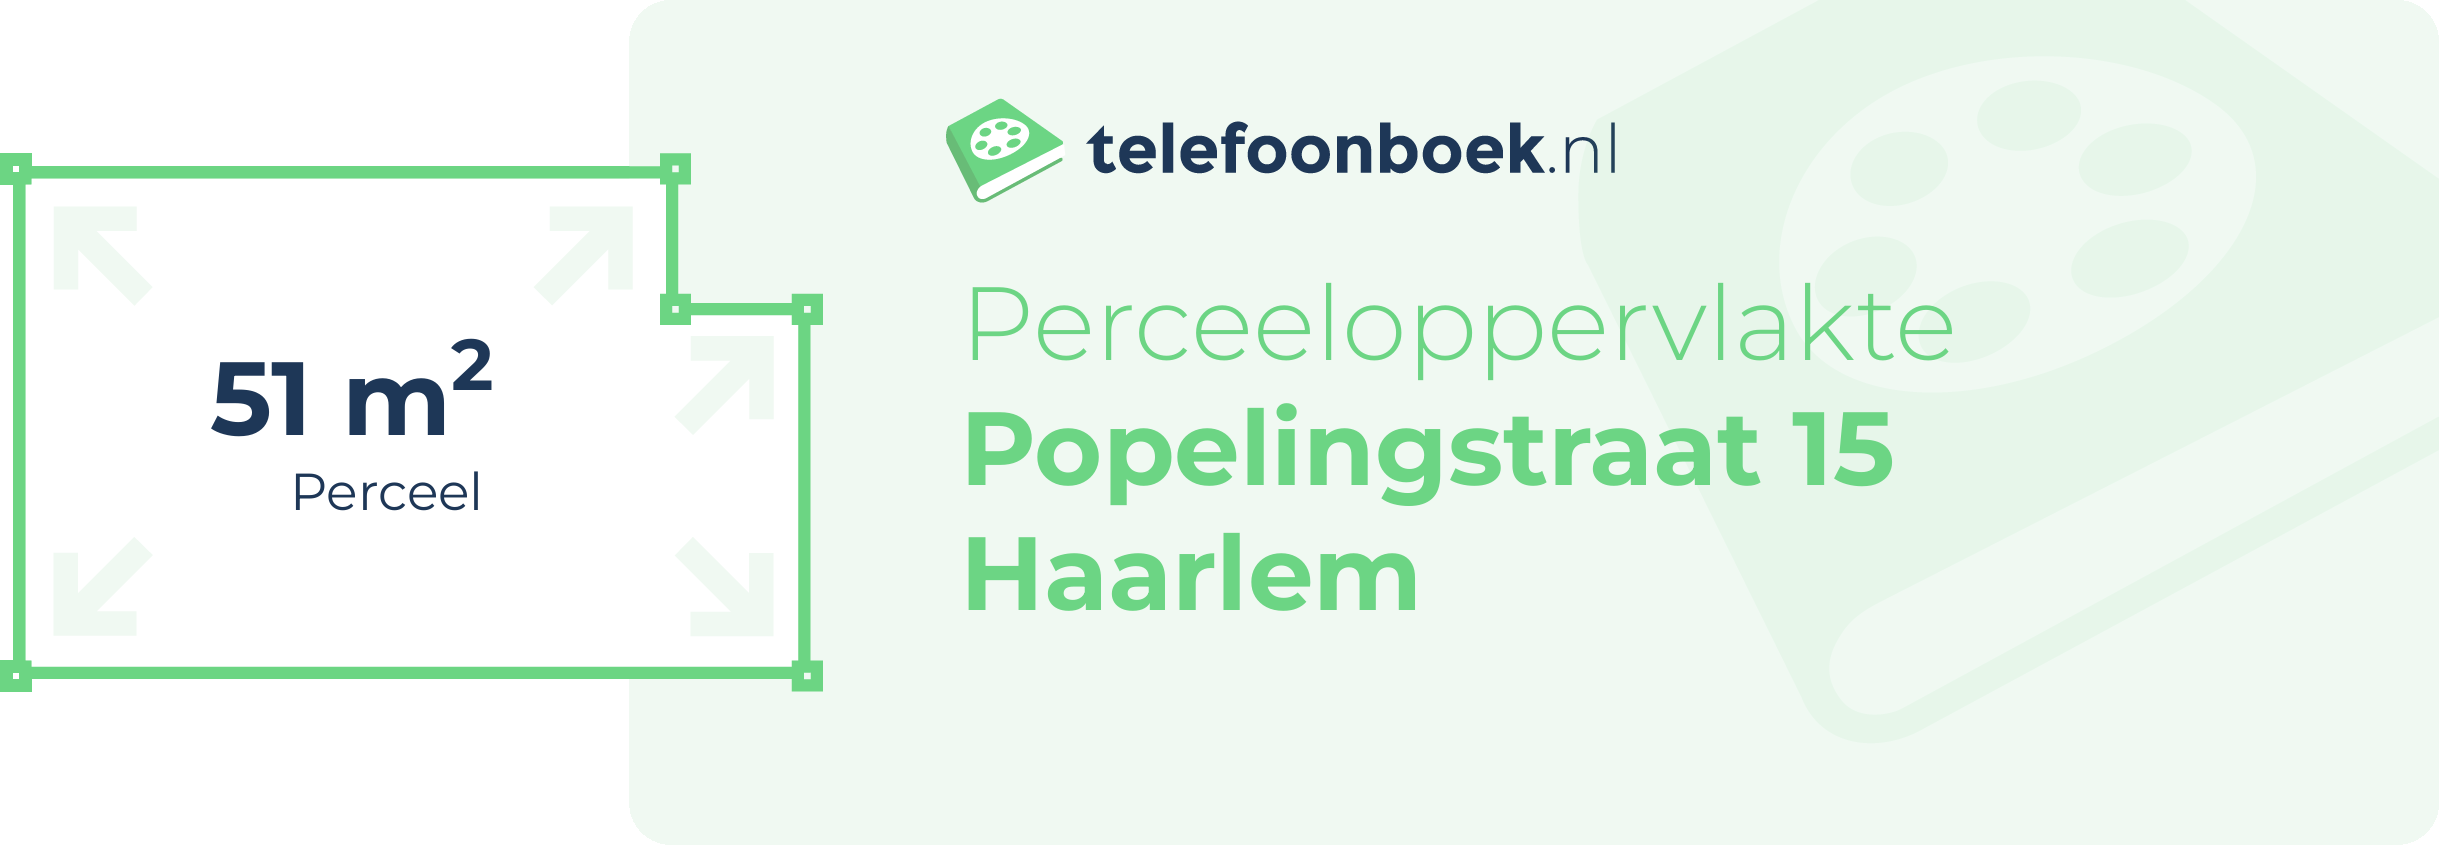 Perceeloppervlakte Popelingstraat 15 Haarlem